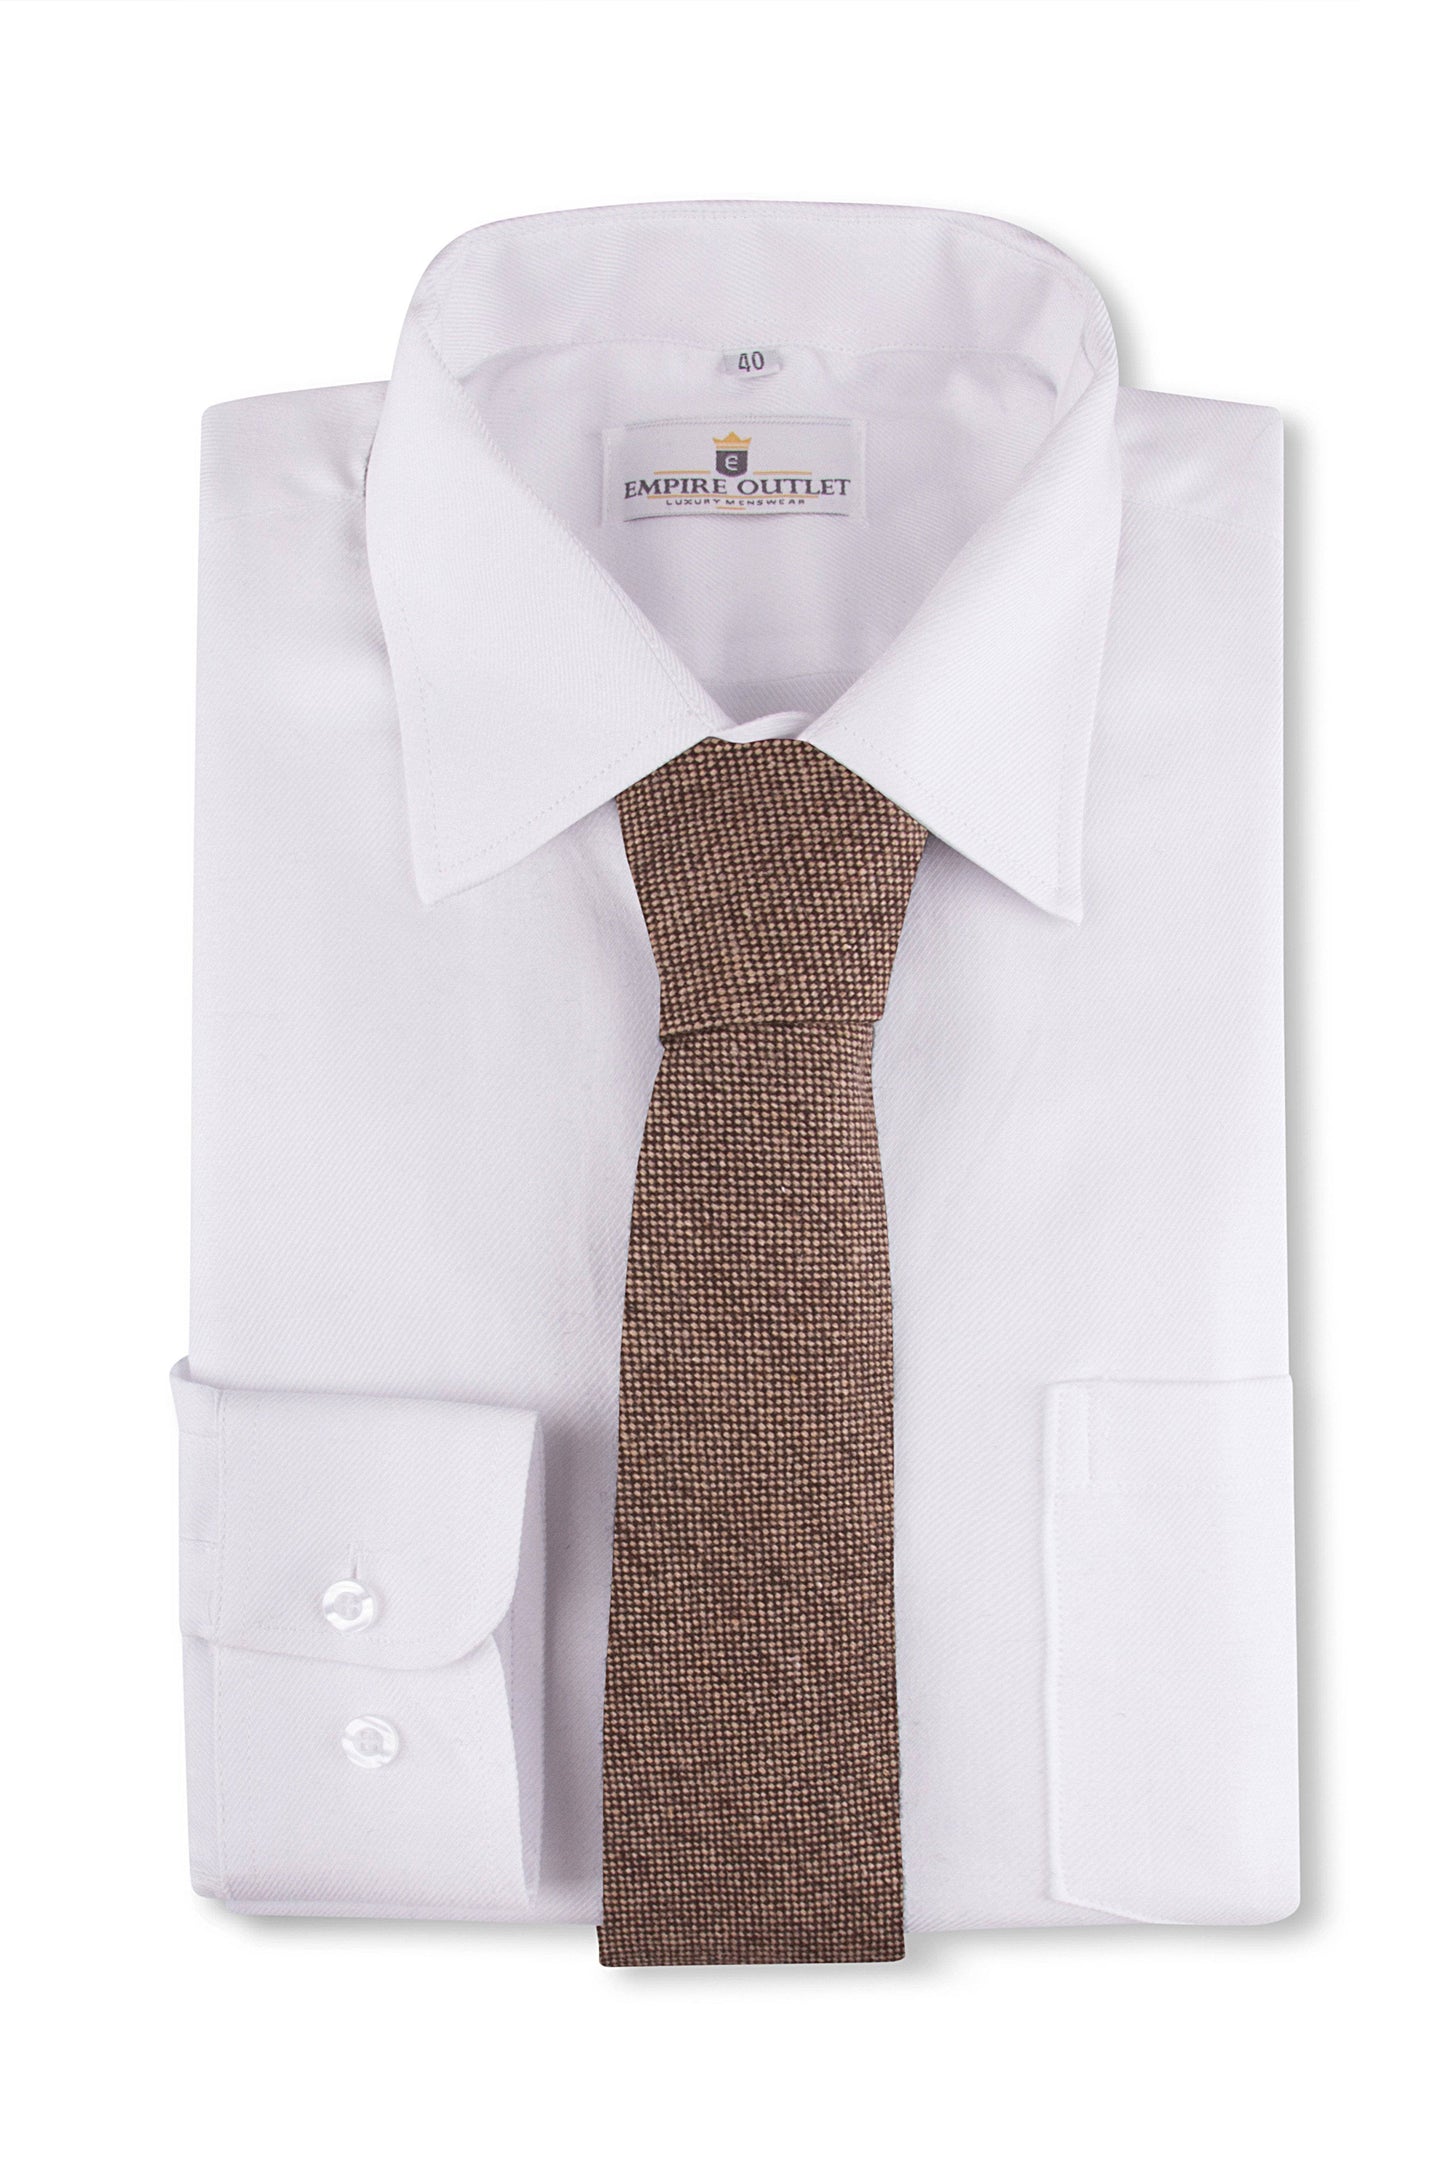 Classic Brown Barleycorn Tweed Tie on a white wedding shirt